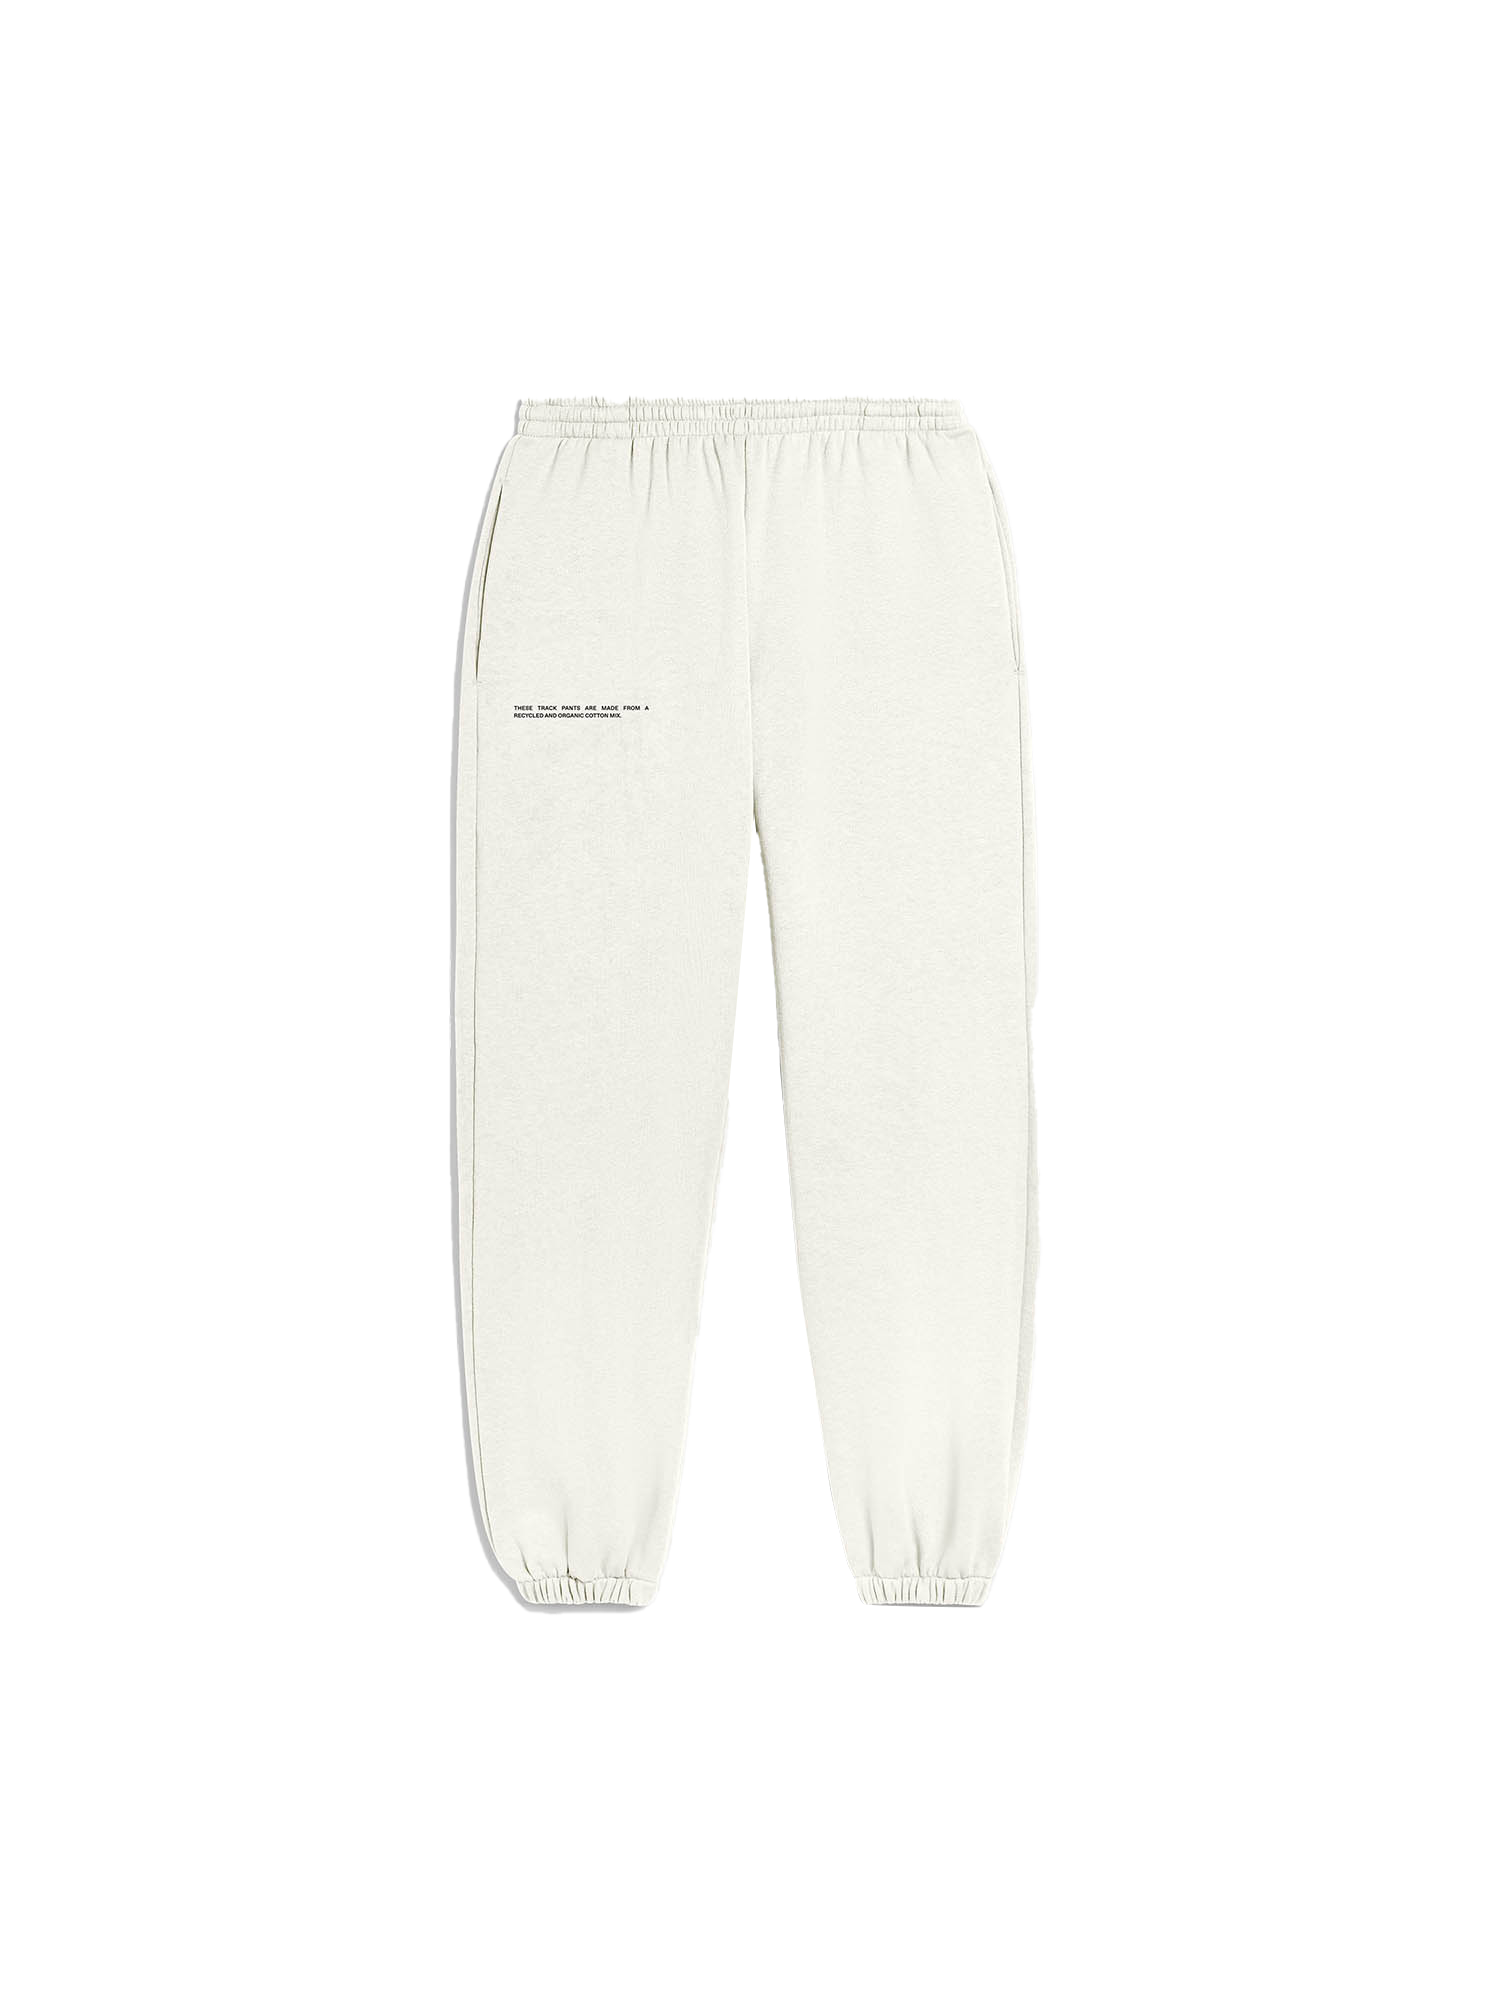 Pantalon cachemire pantacourt ample Blanc vintage, Pantalon PETRA